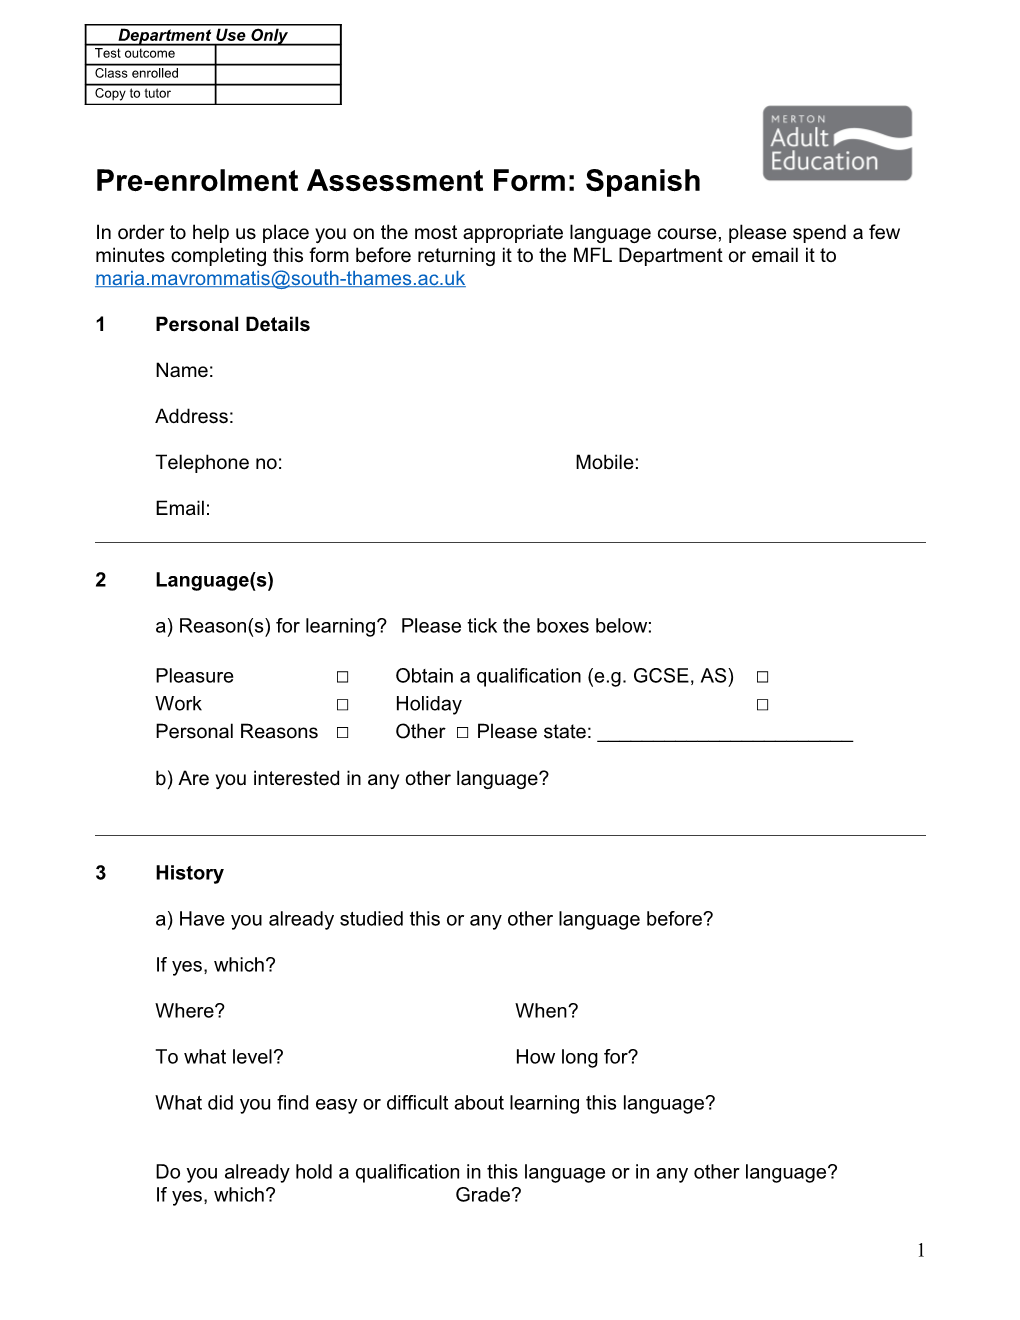 Pre-Enrolment Assessment Form: Spanish